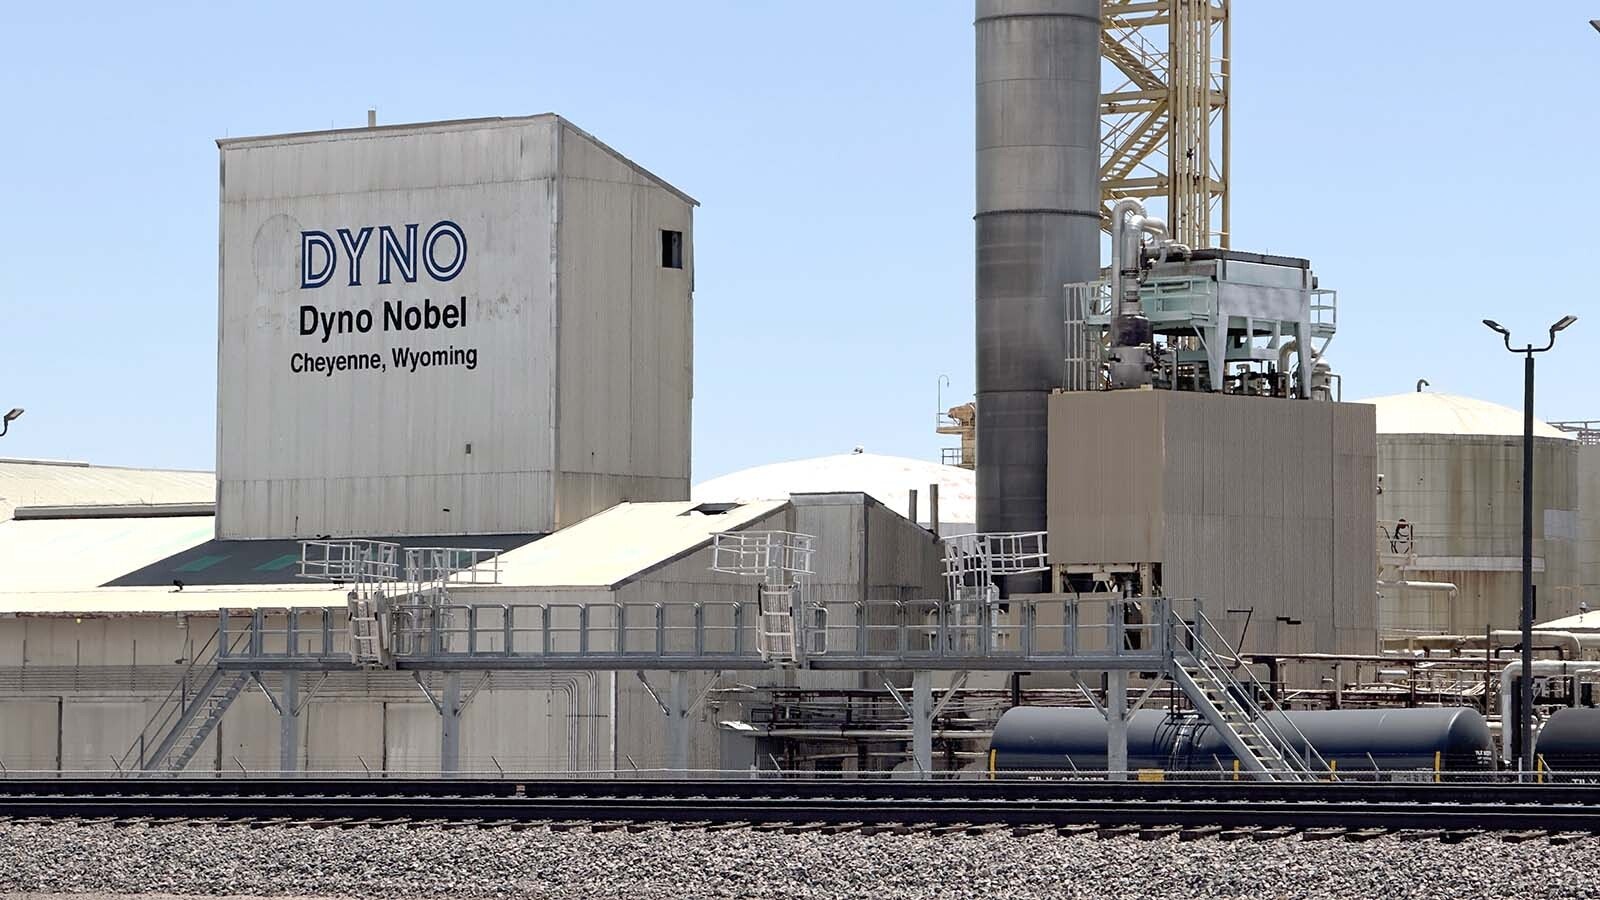 The Dyno Nobel plant in Cheyenne, Wyoming.